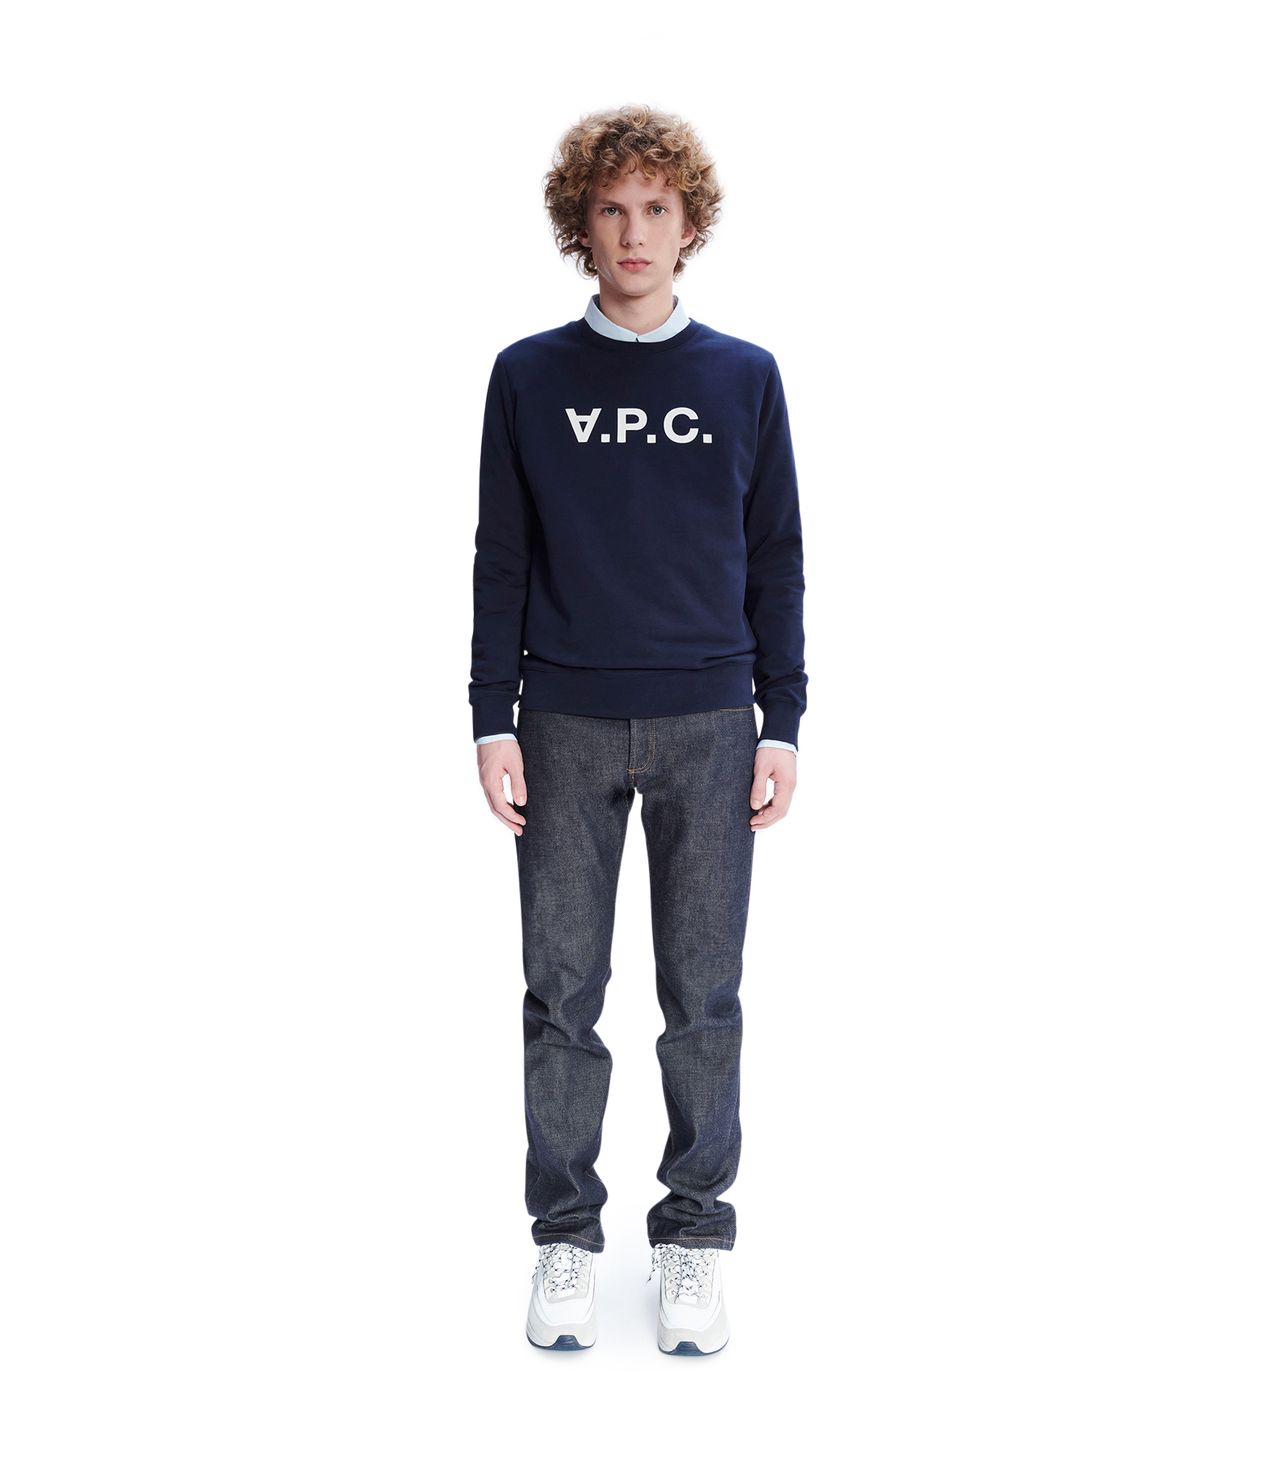 VPC sweatshirt DARK NAVY BLUE APC